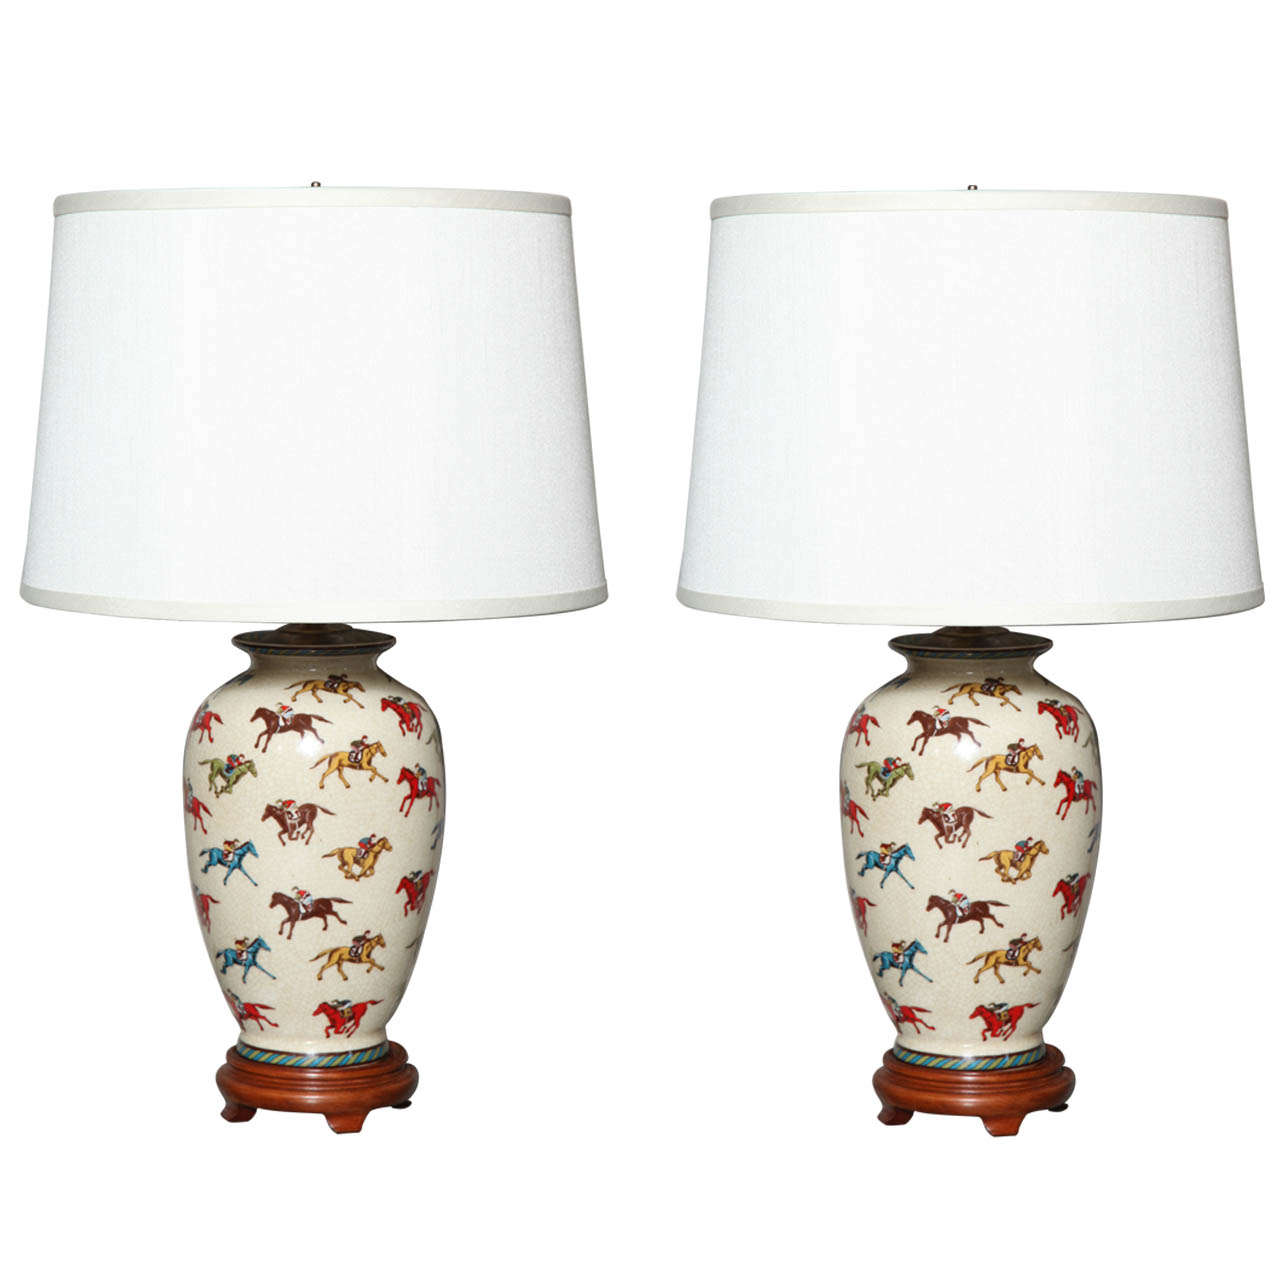 Pair of Equestrian Ceramic Table Lamps